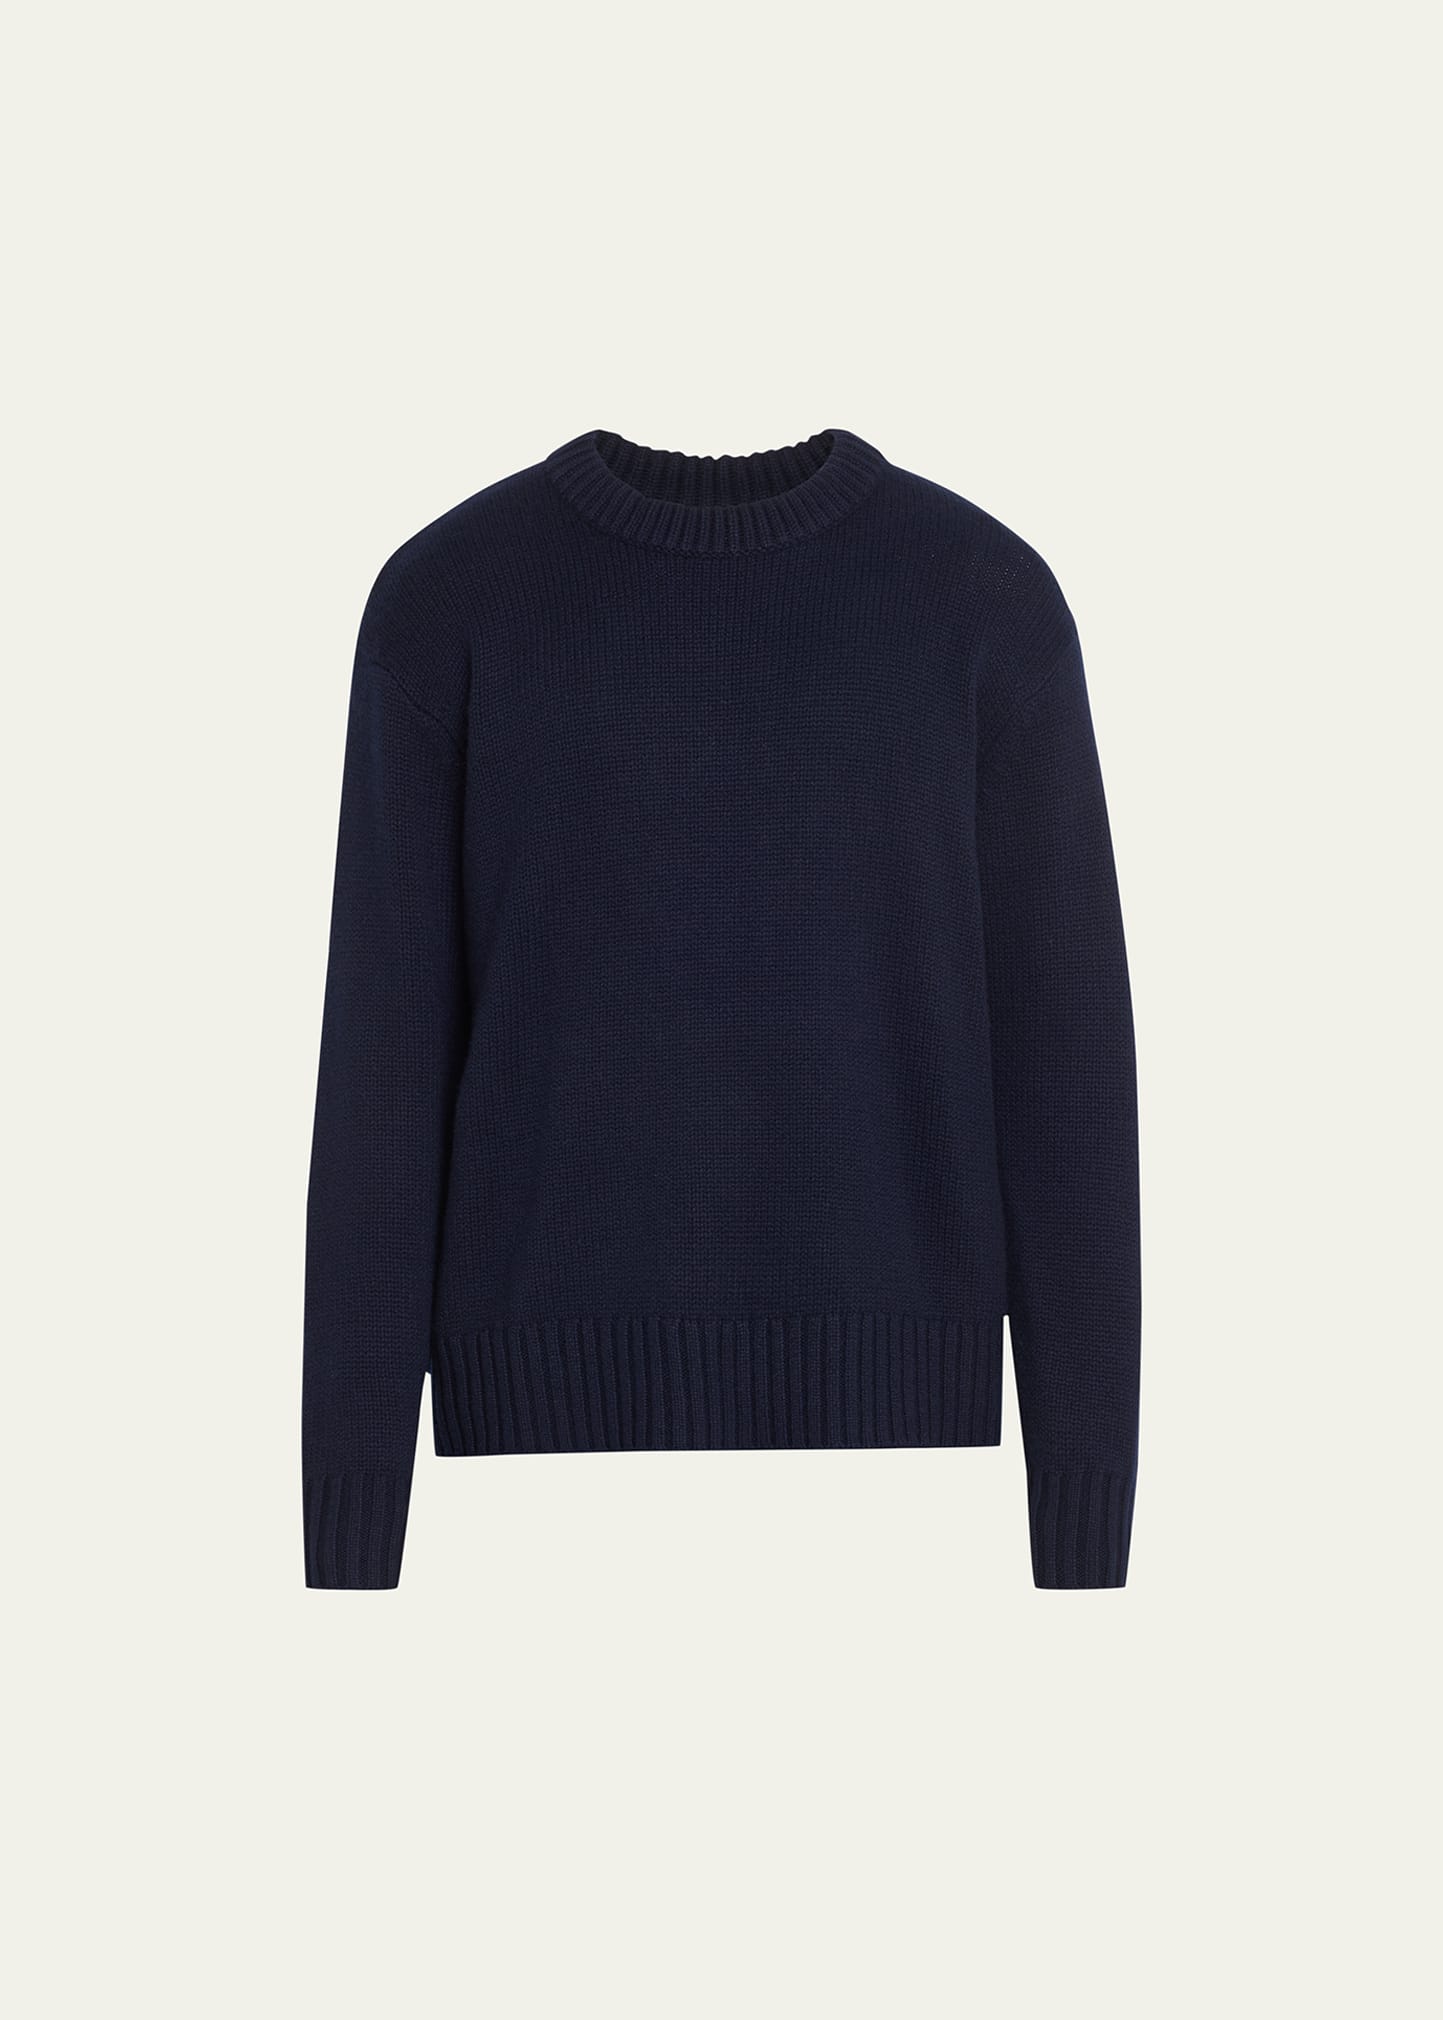 Men's Claude 5-Gauge Cashmere Knit Sweater